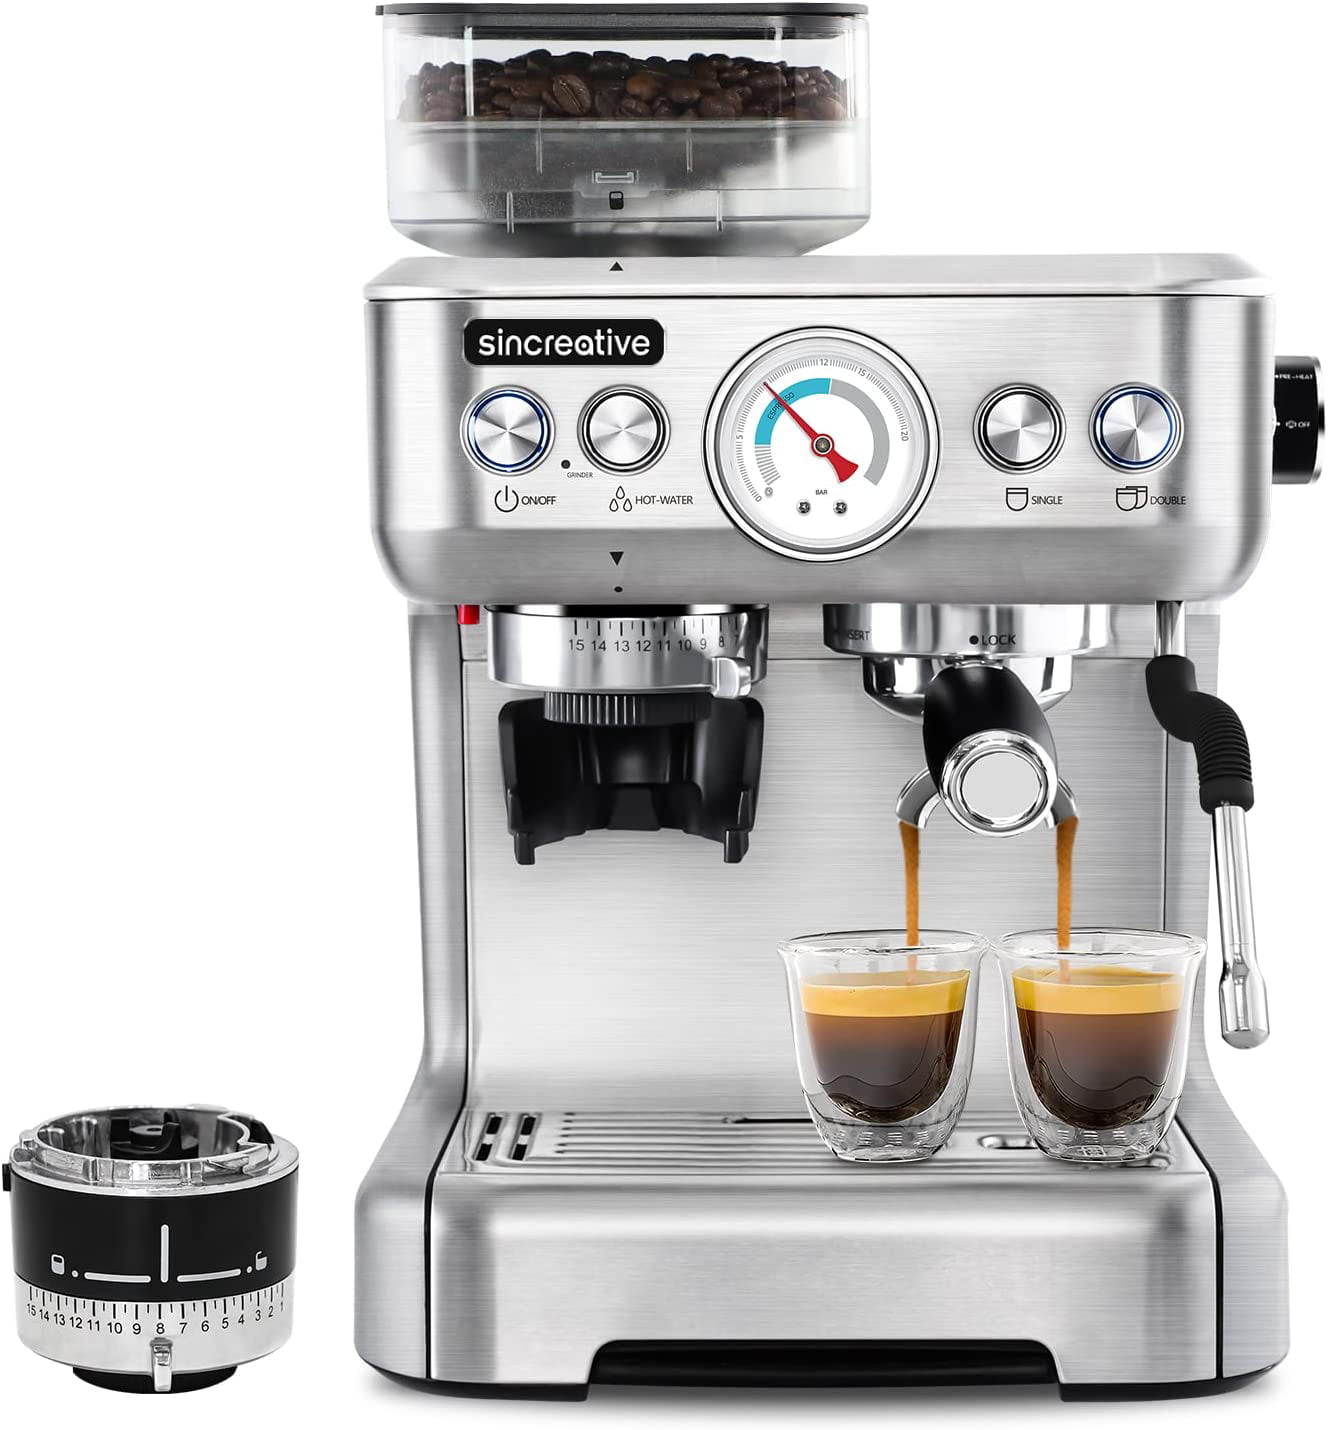 Semi-Automatic Espresso Coffee Maker with Grinder